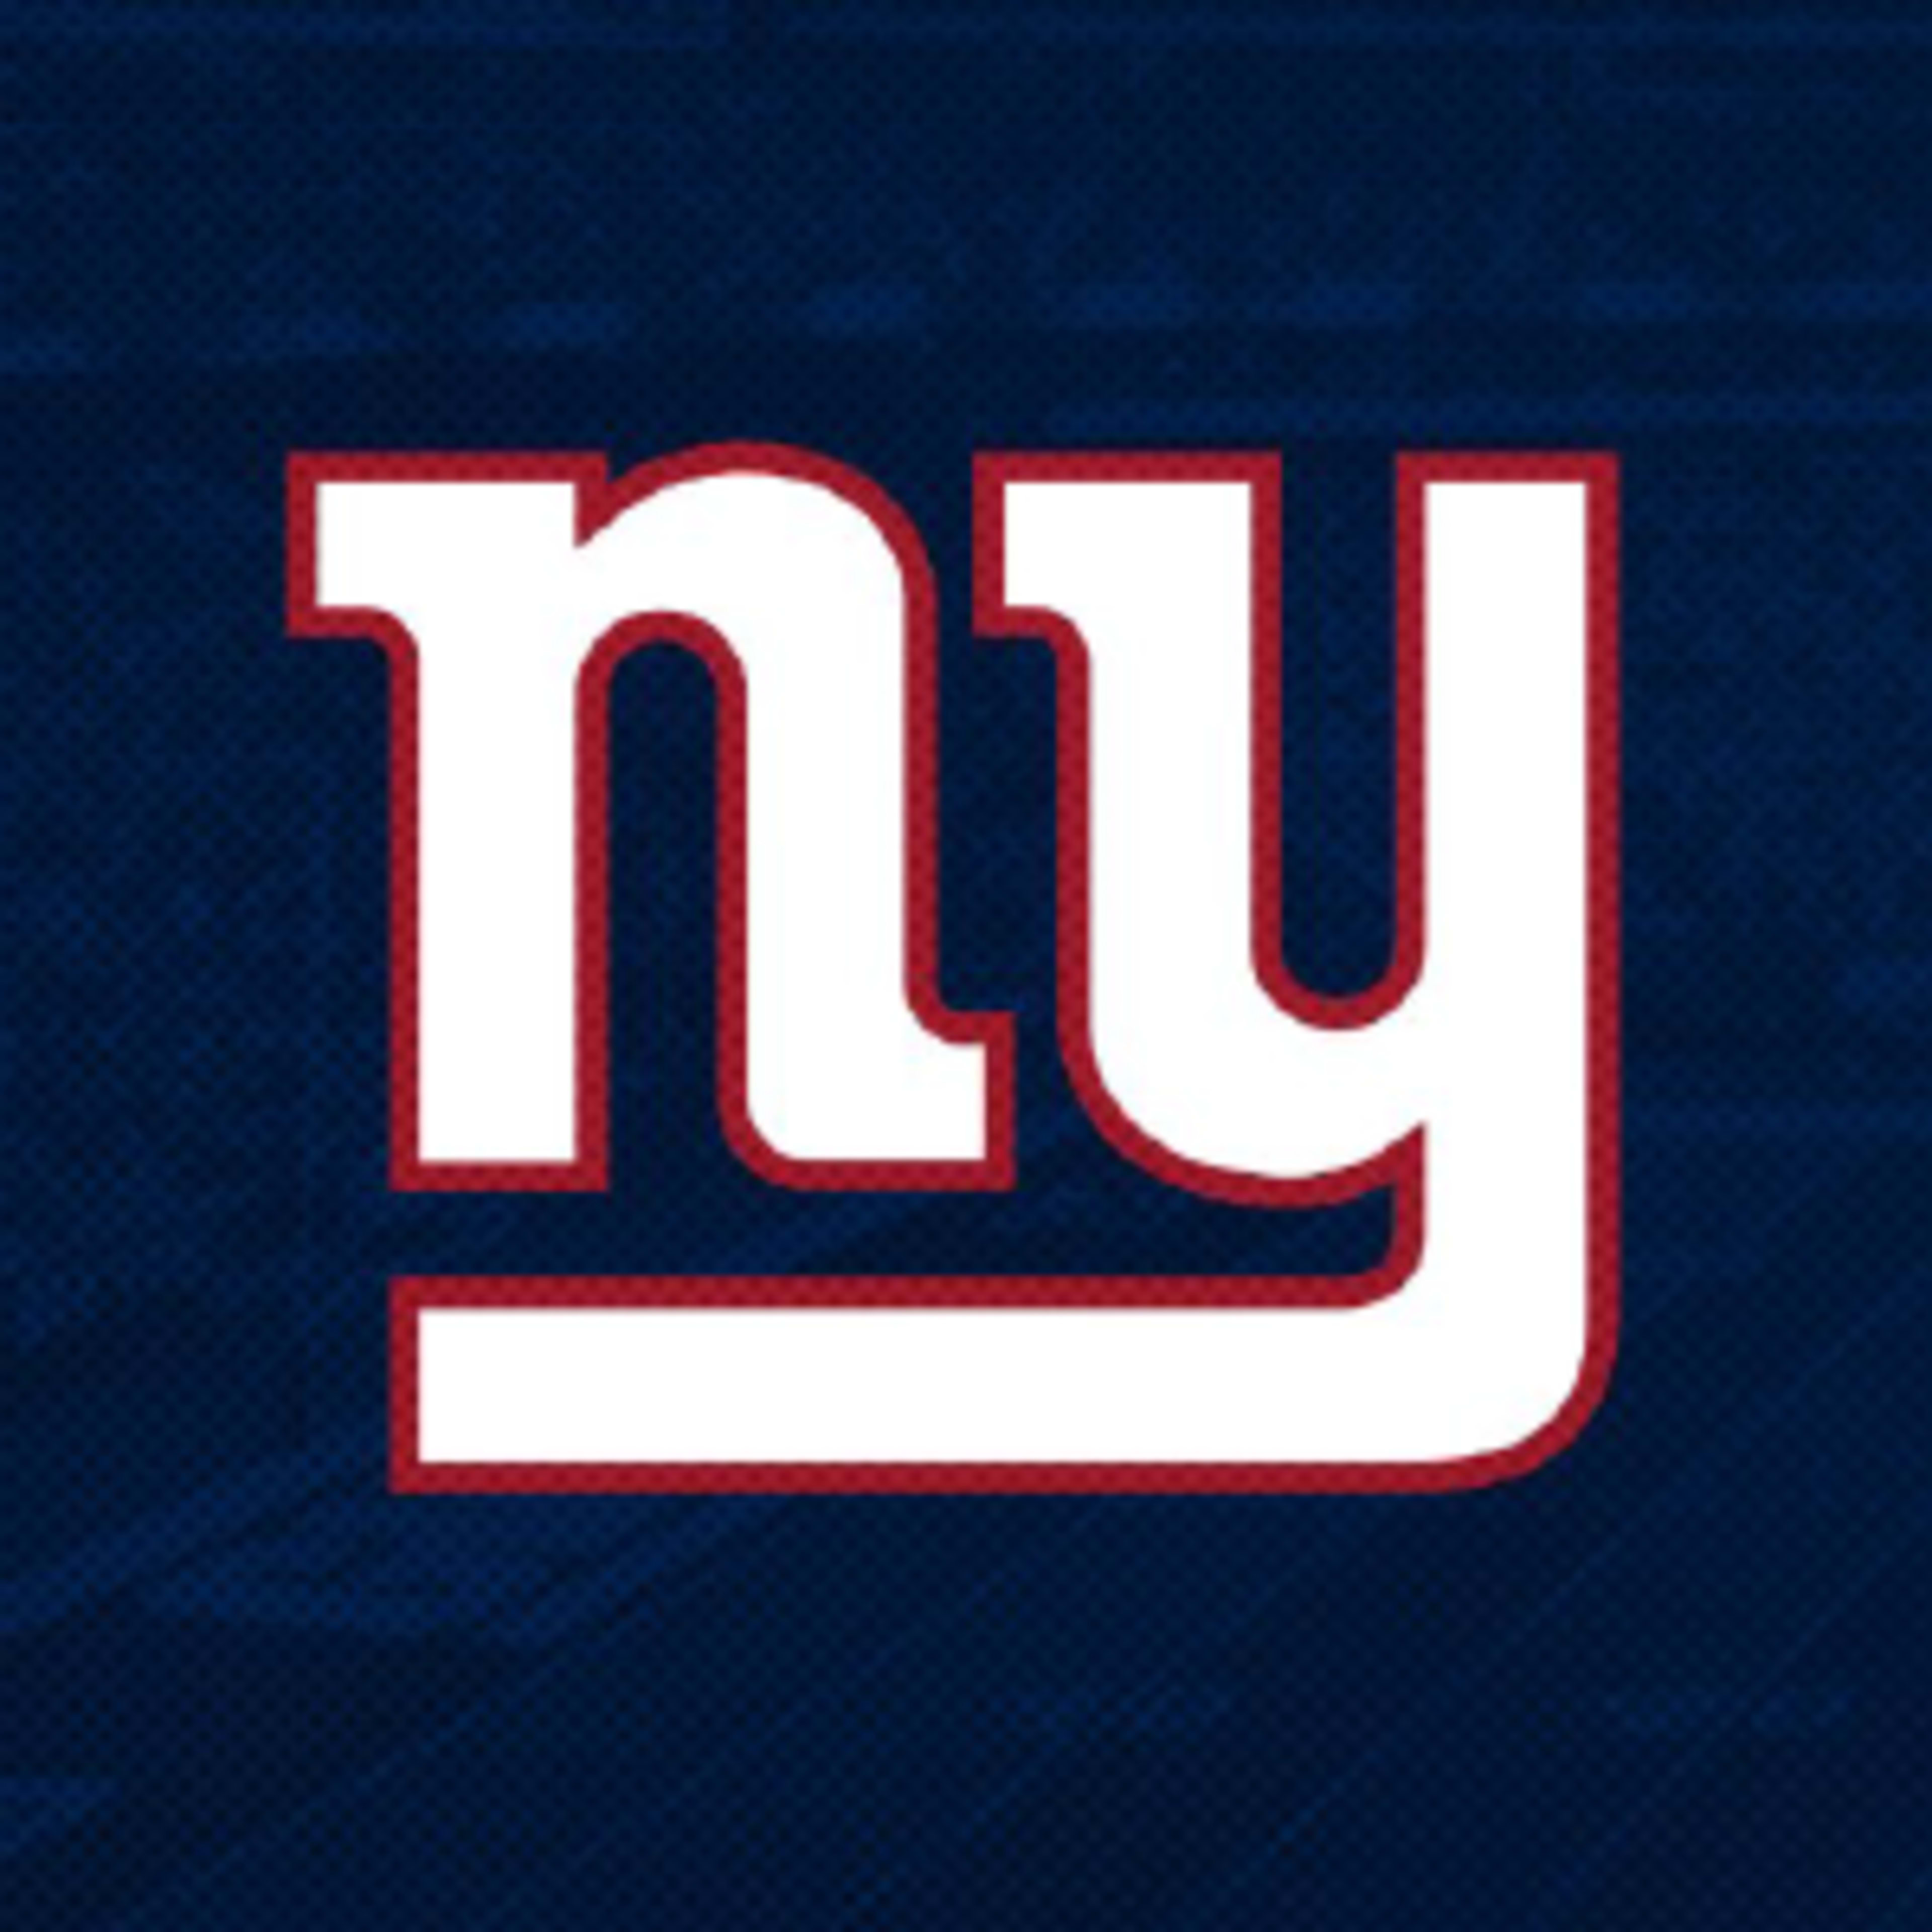 NY Giants Fan ShopCode